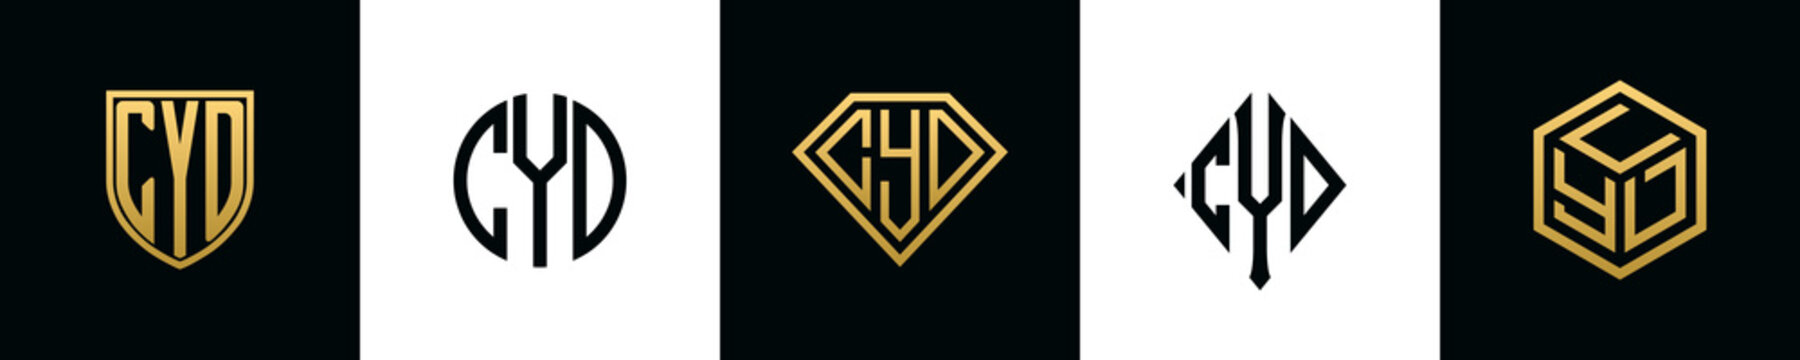 Initial letters CYD logo designs Bundle